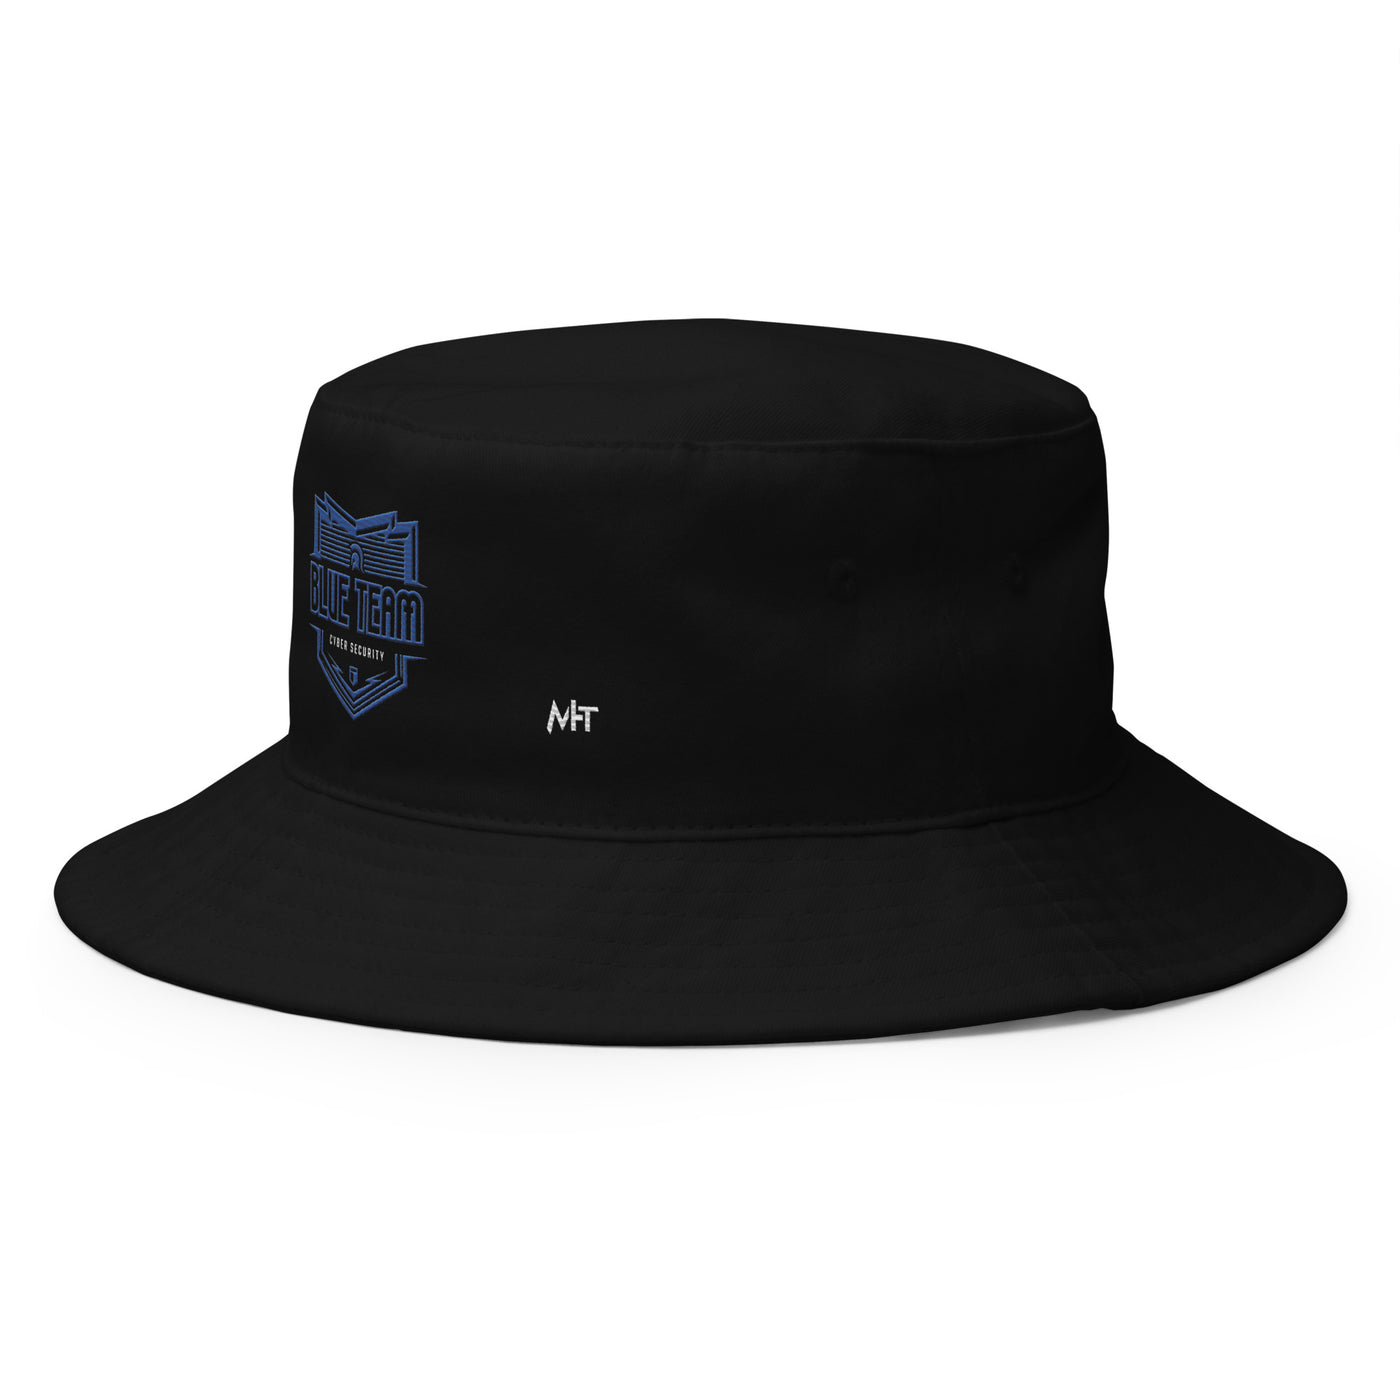 Cyber Security Blue Team 16 - Bucket Hat